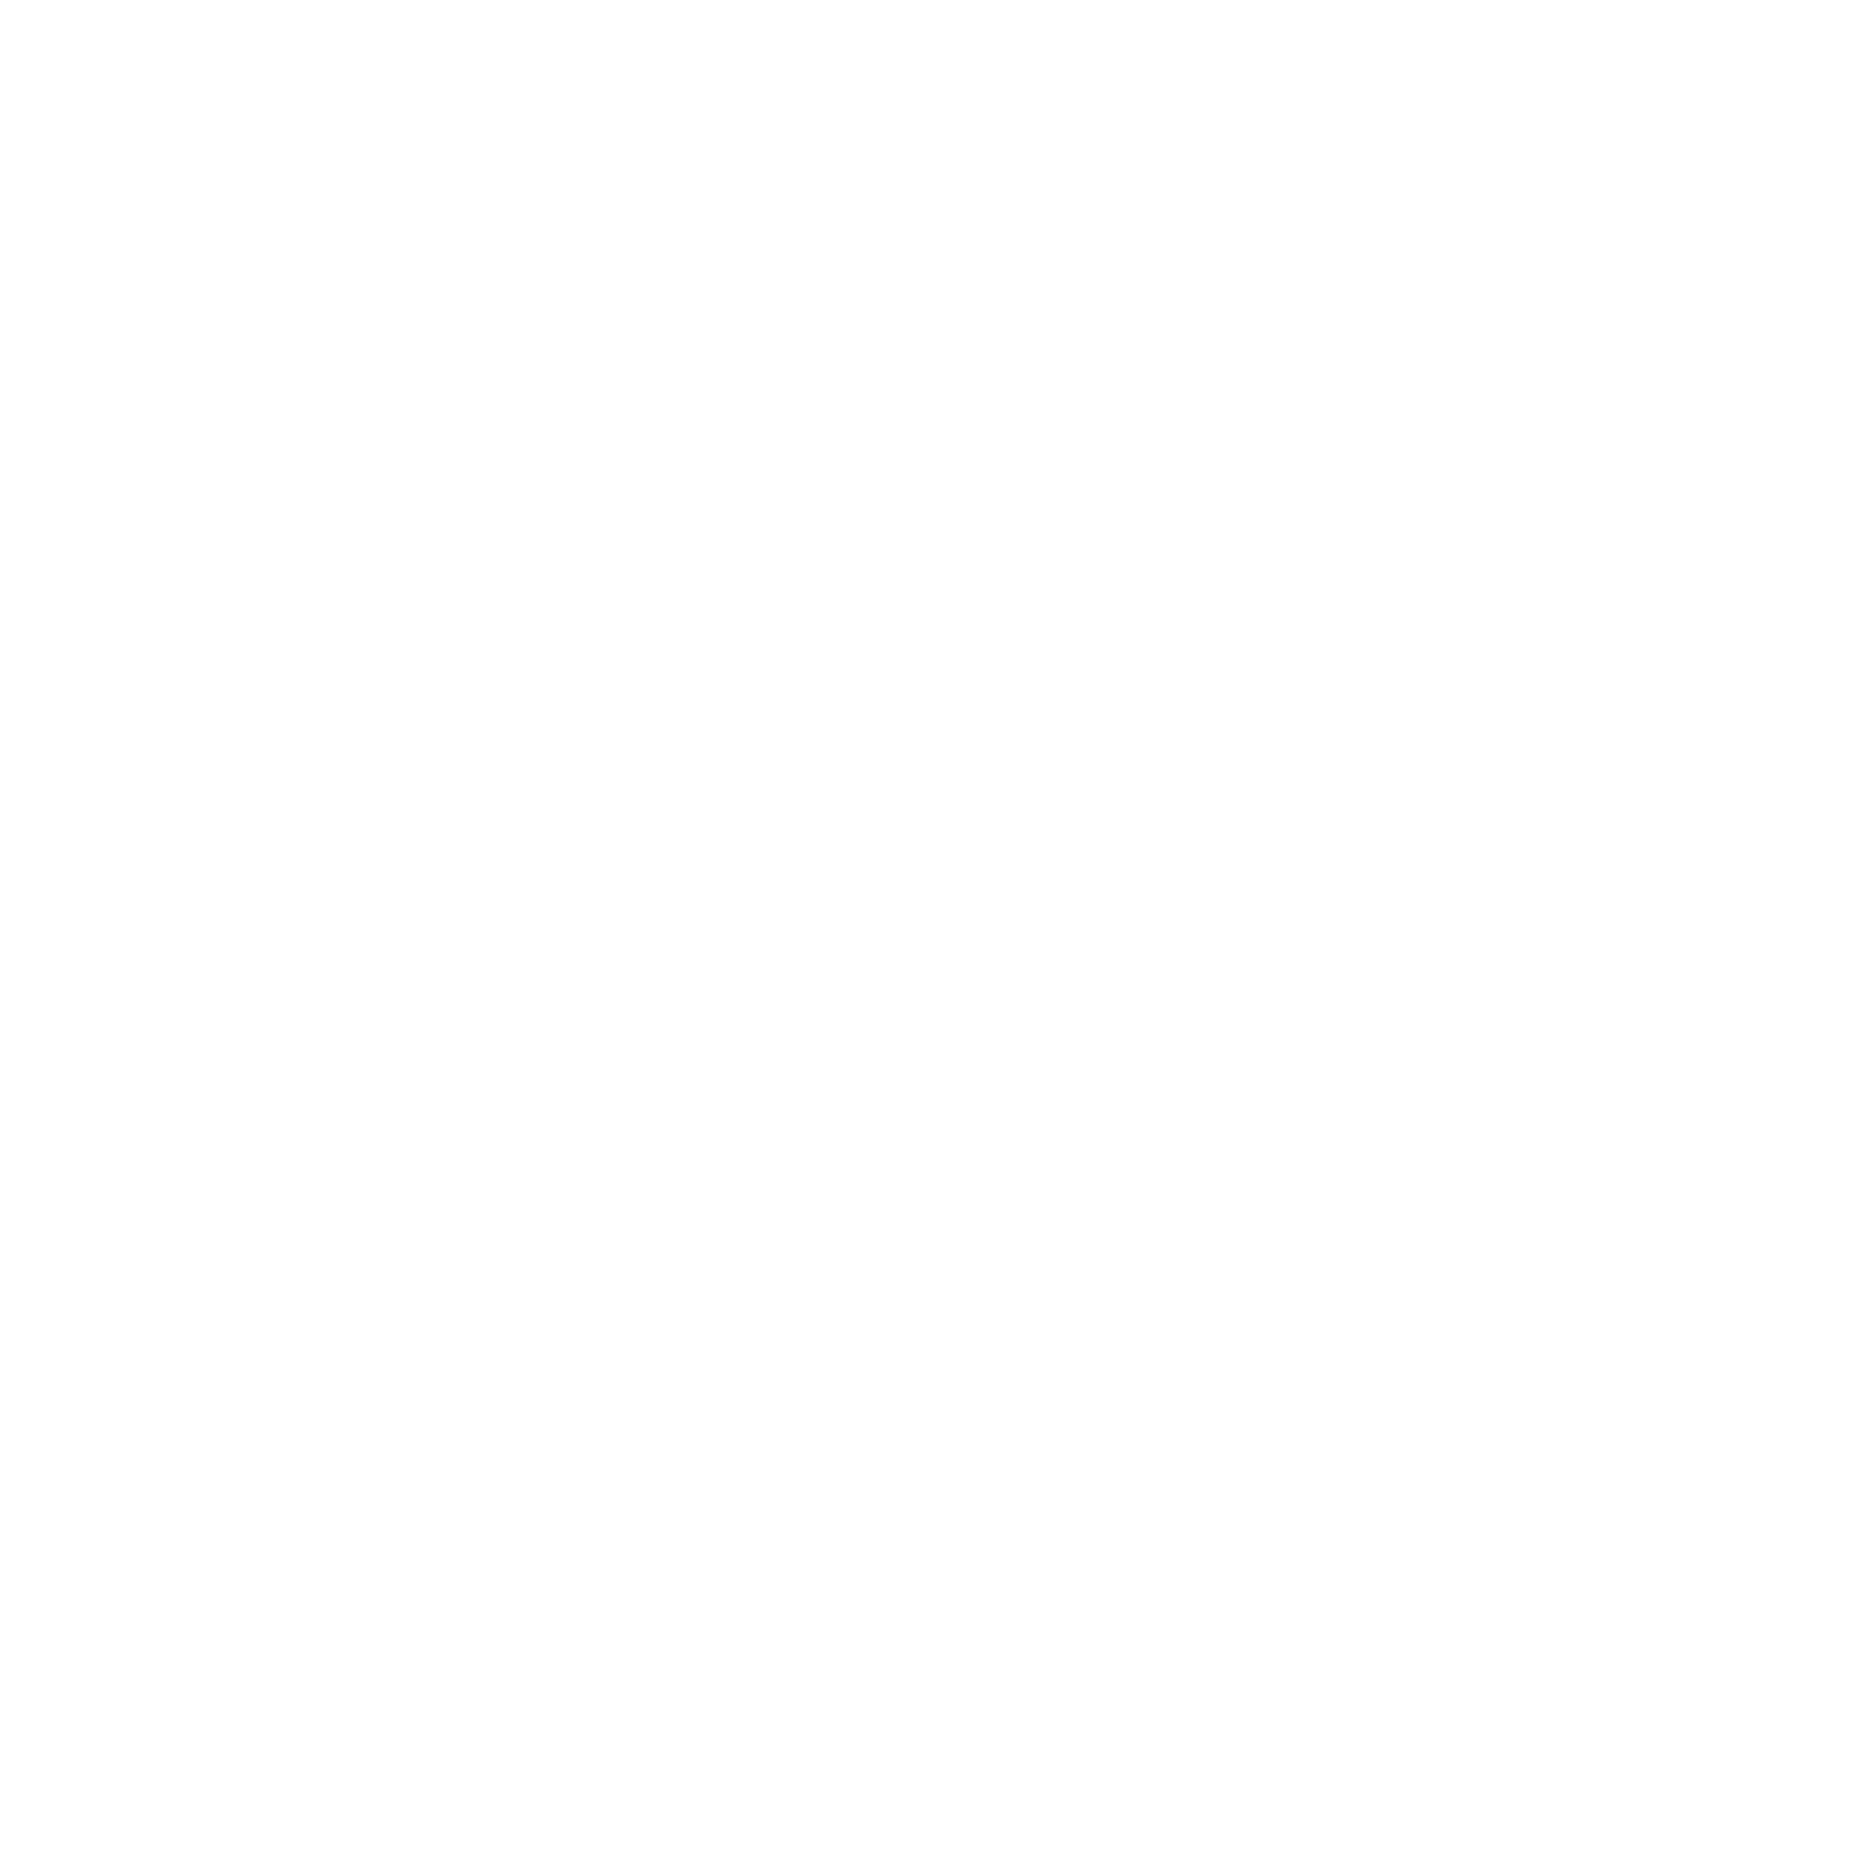 atx boat adventures